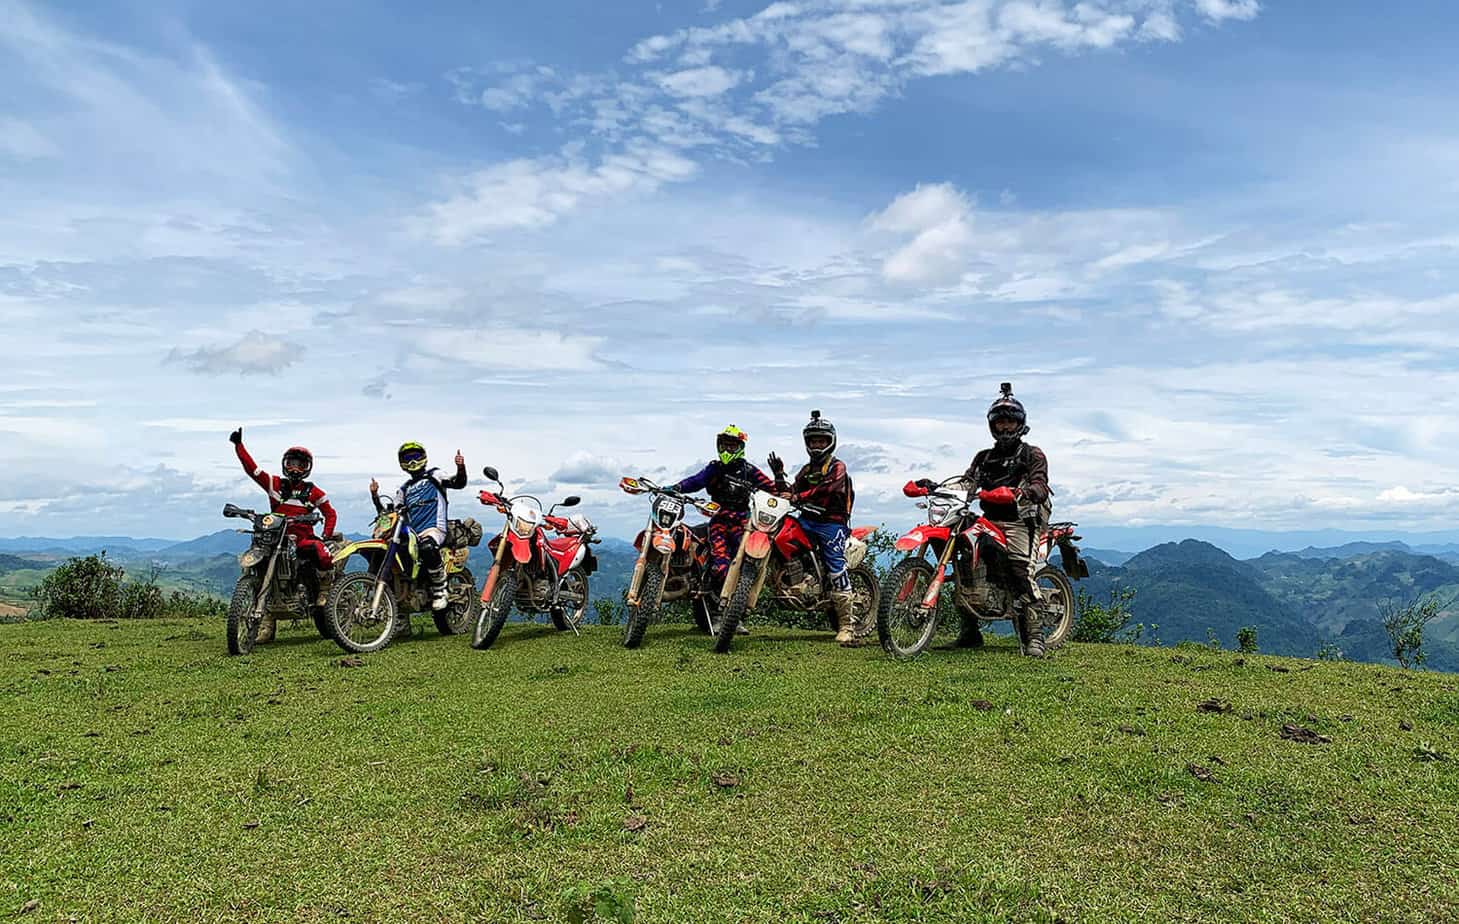 Traveling by motorbike in Vietnam - Freedom